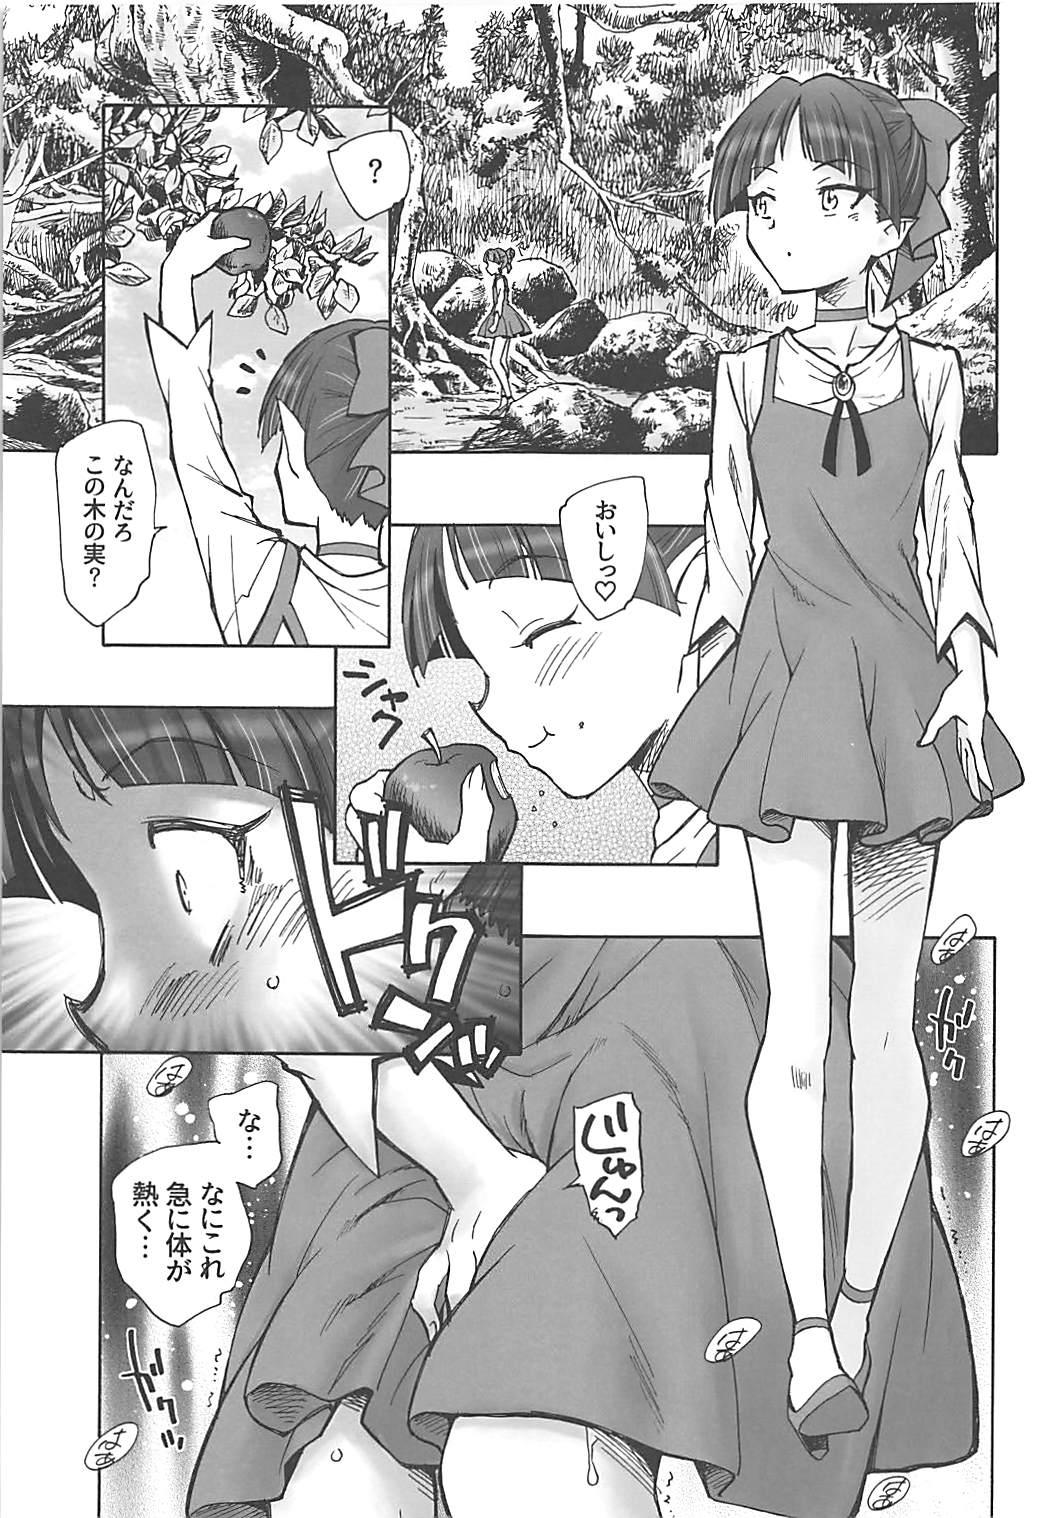 Neko Musume no Ii Kimochi - Cat Girl's Ecstasy 1